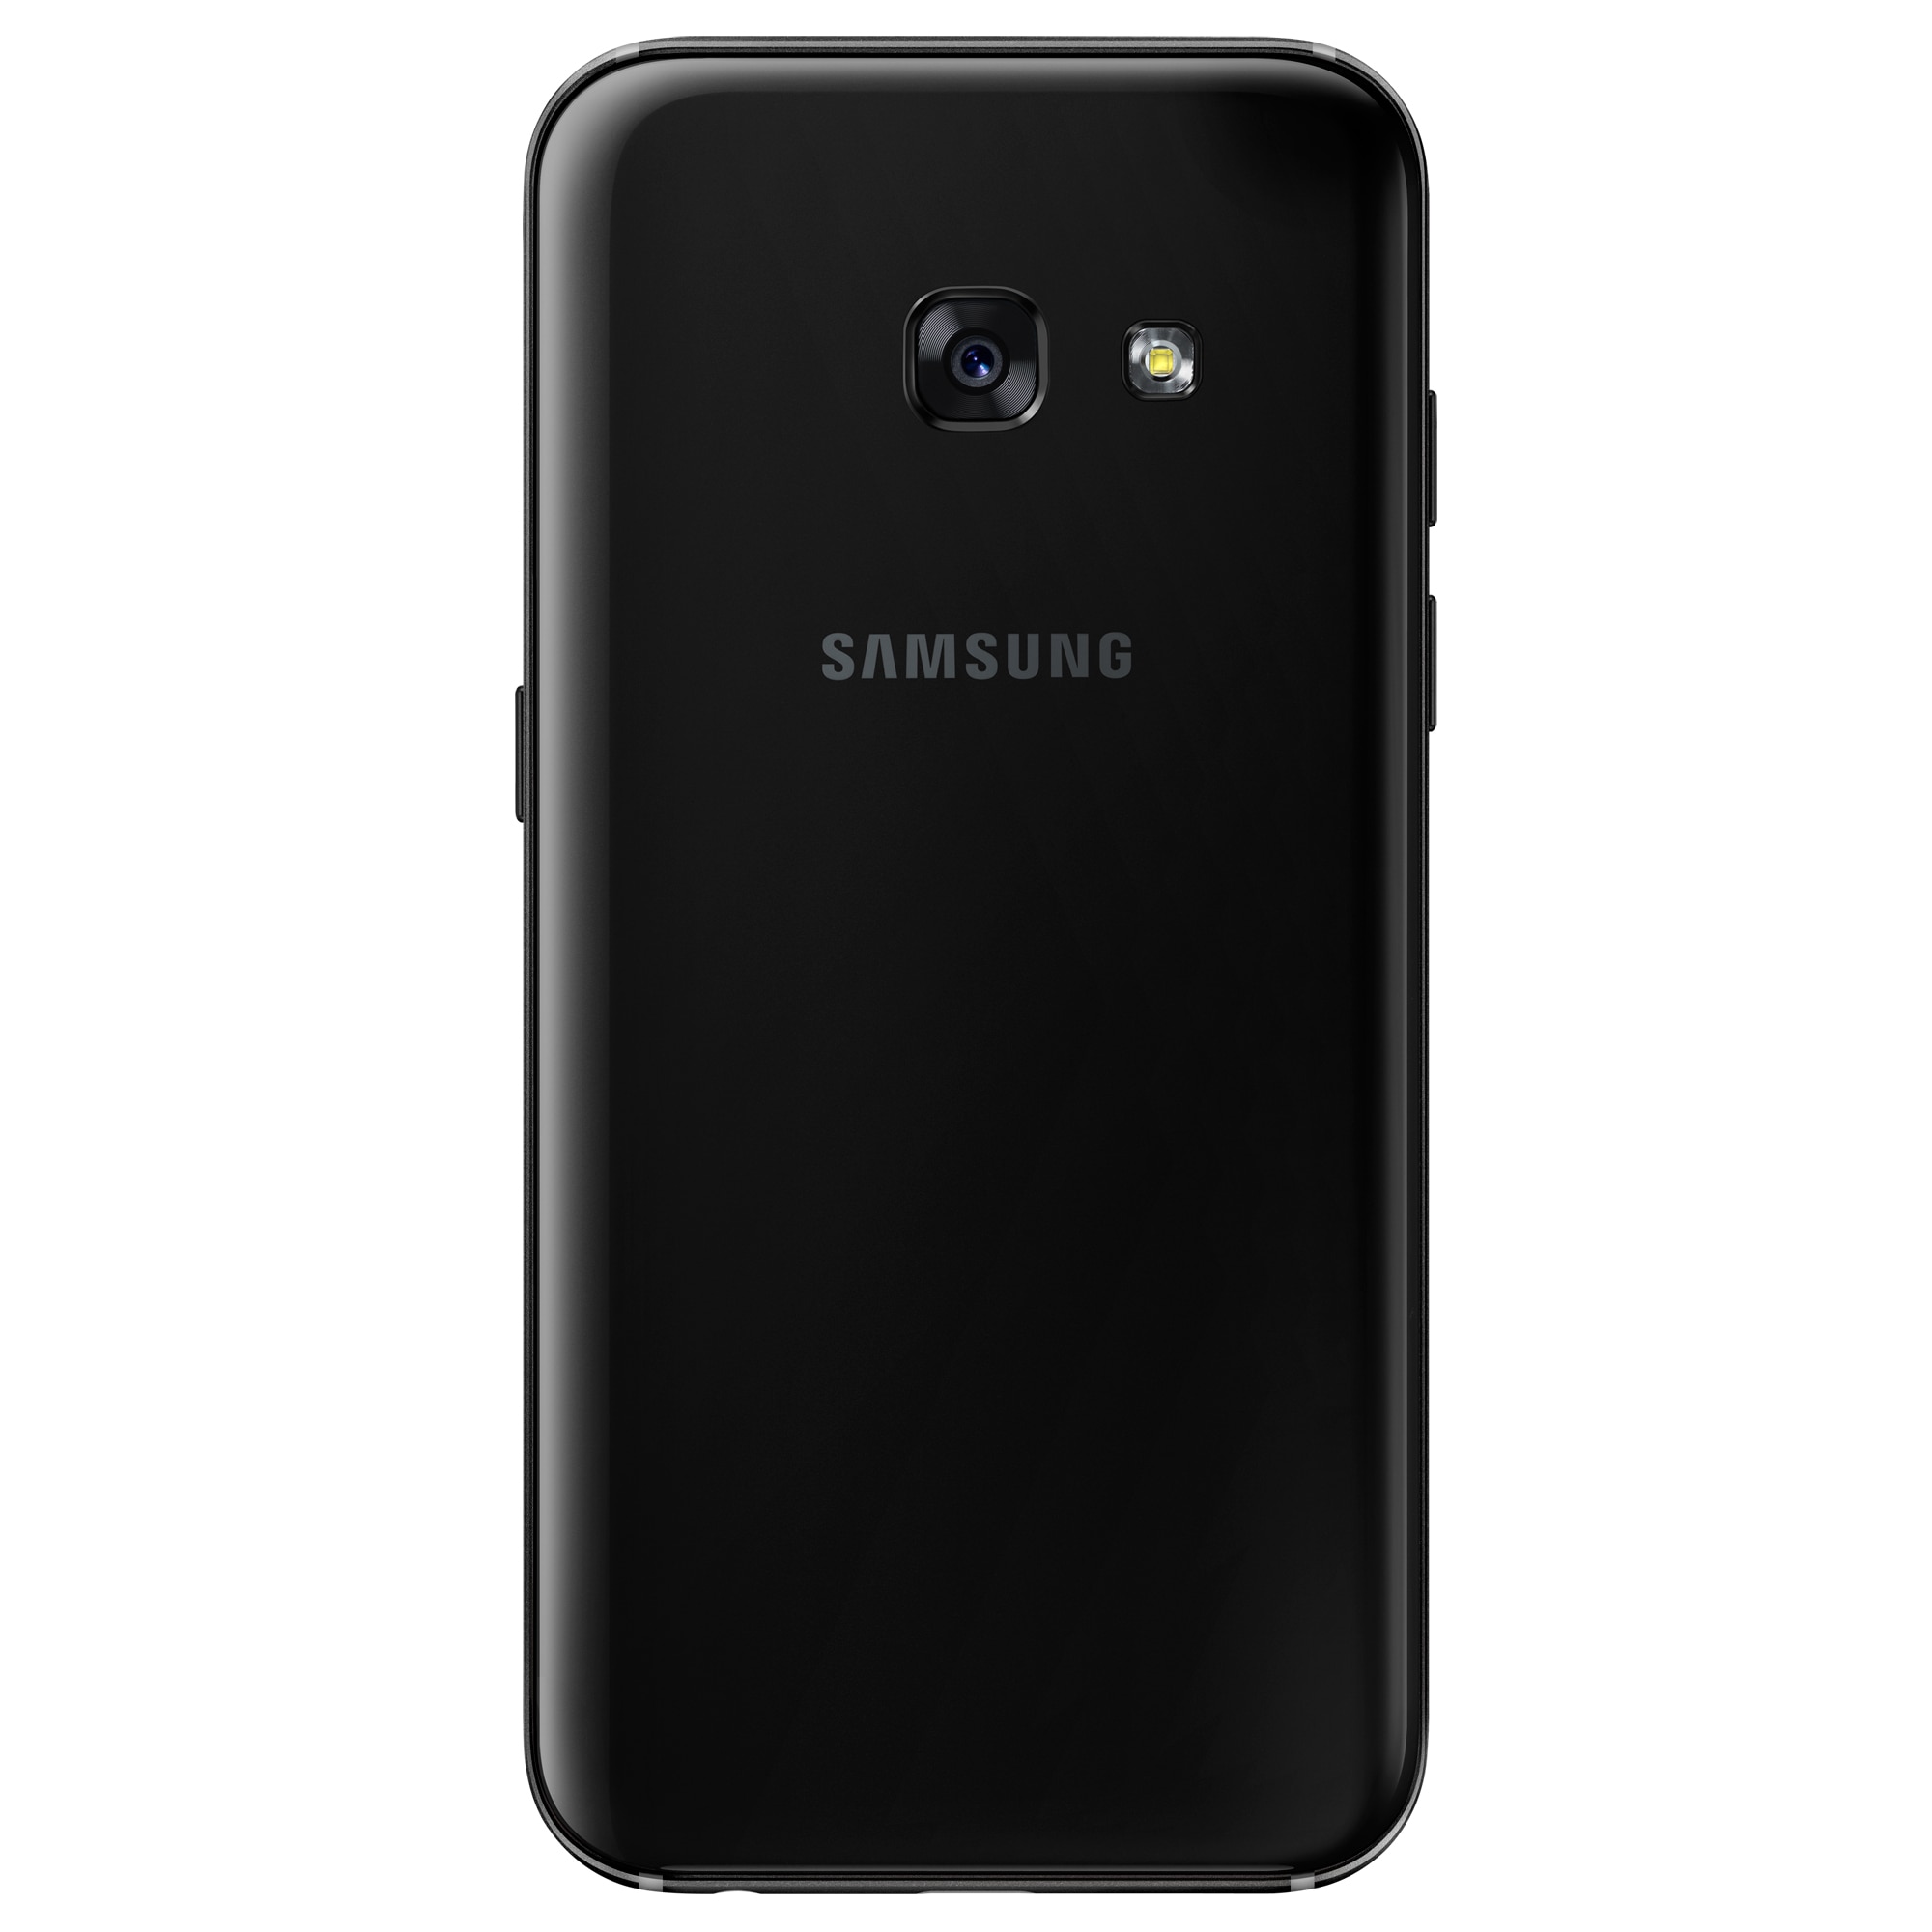 Телефоны самсунг а5 2017. Samsung Galaxy a5 2017. Смартфон Samsung Galaxy a3 2017. Samsung Galaxy a5 2017 Black. Samsung Galaxy a5 2017 черный.